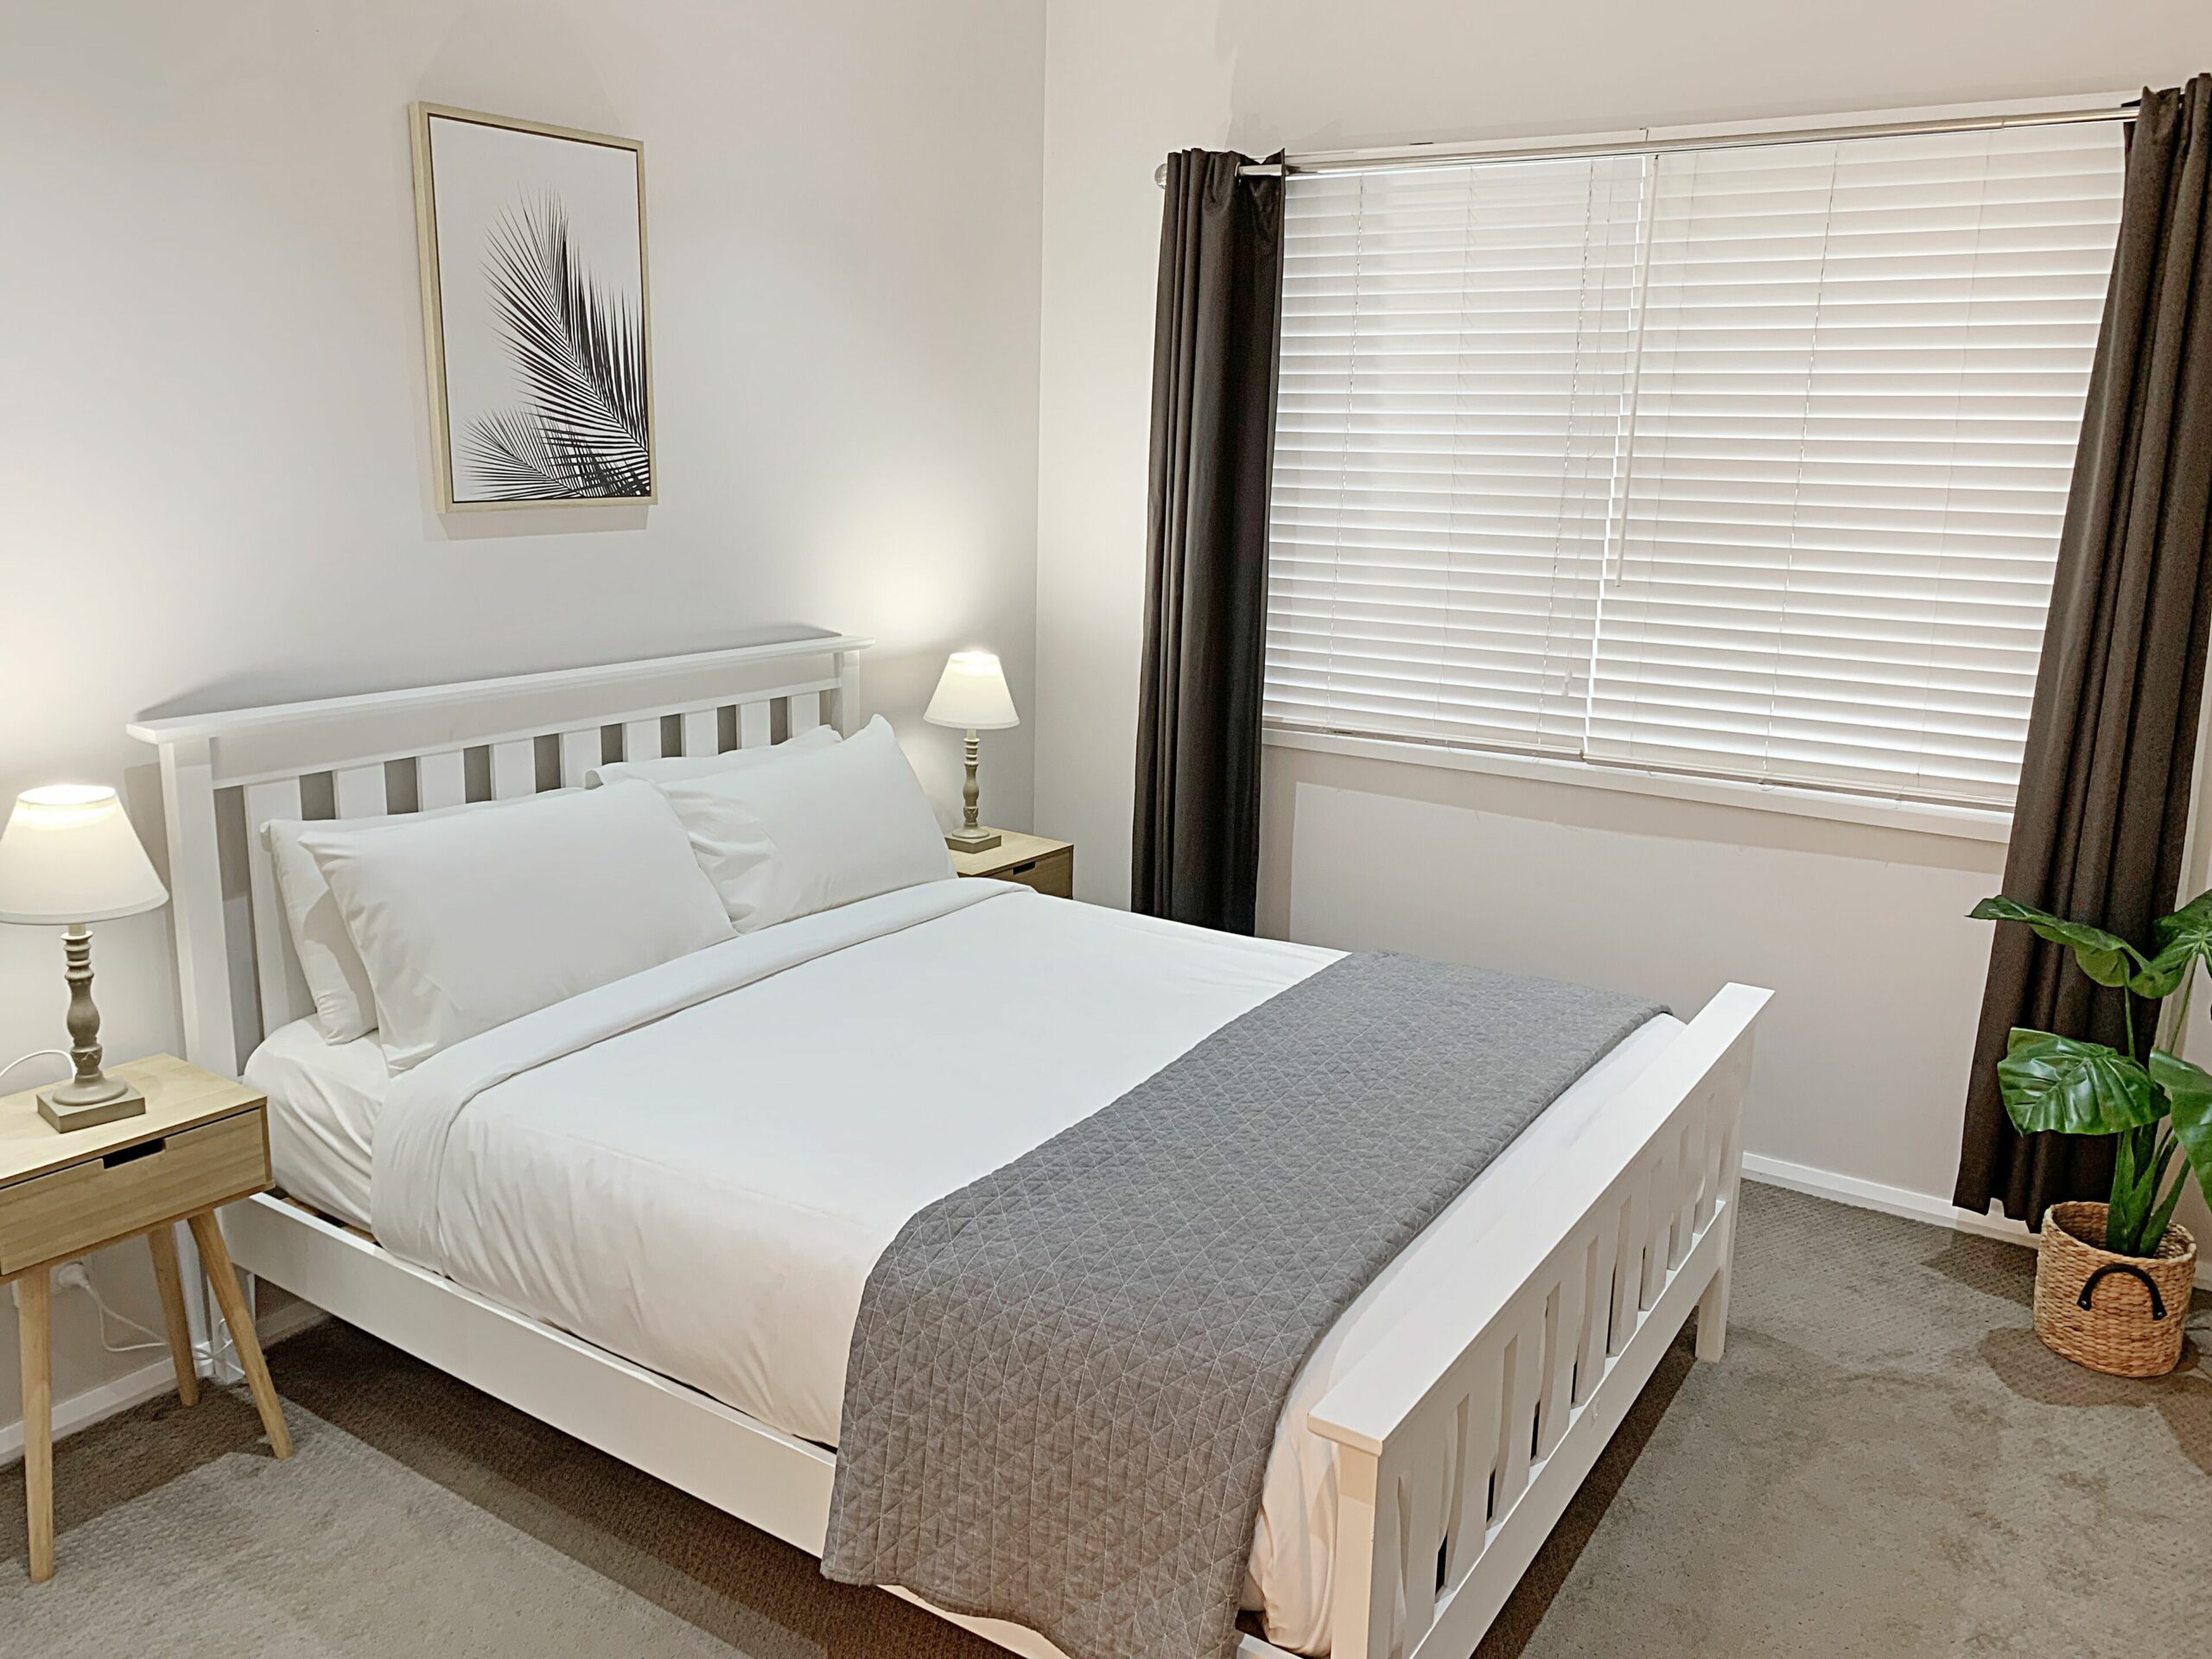 Bright 3-bedroom Apartment - Central Armidale